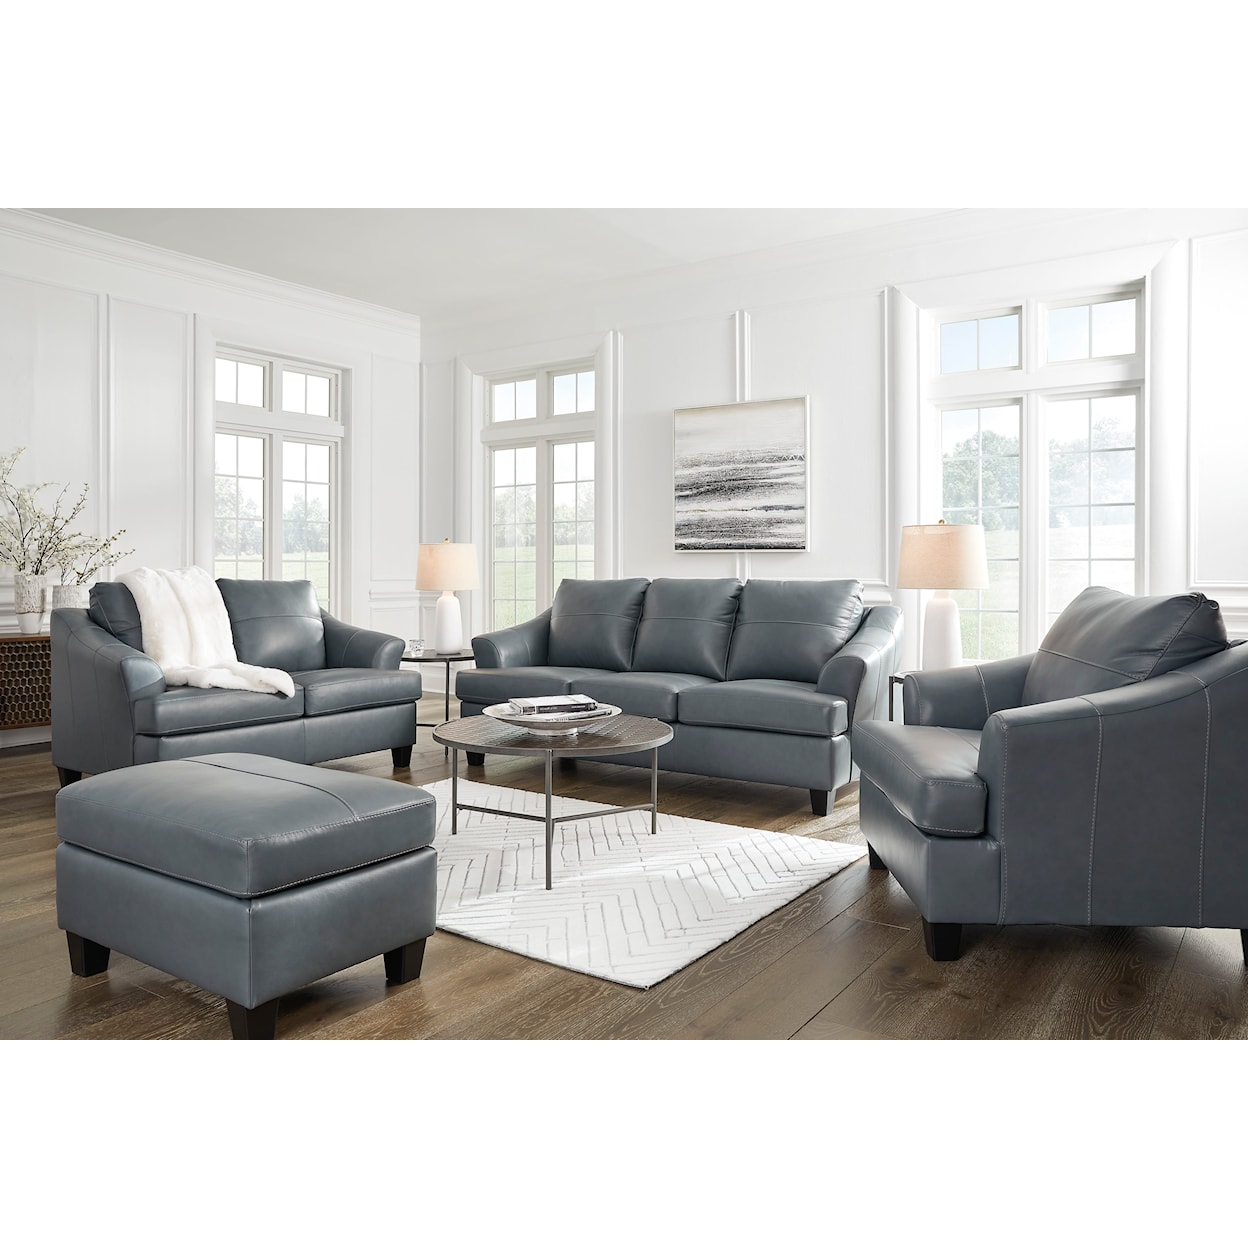 Ashley Furniture Signature Design Genoa Living Room Set